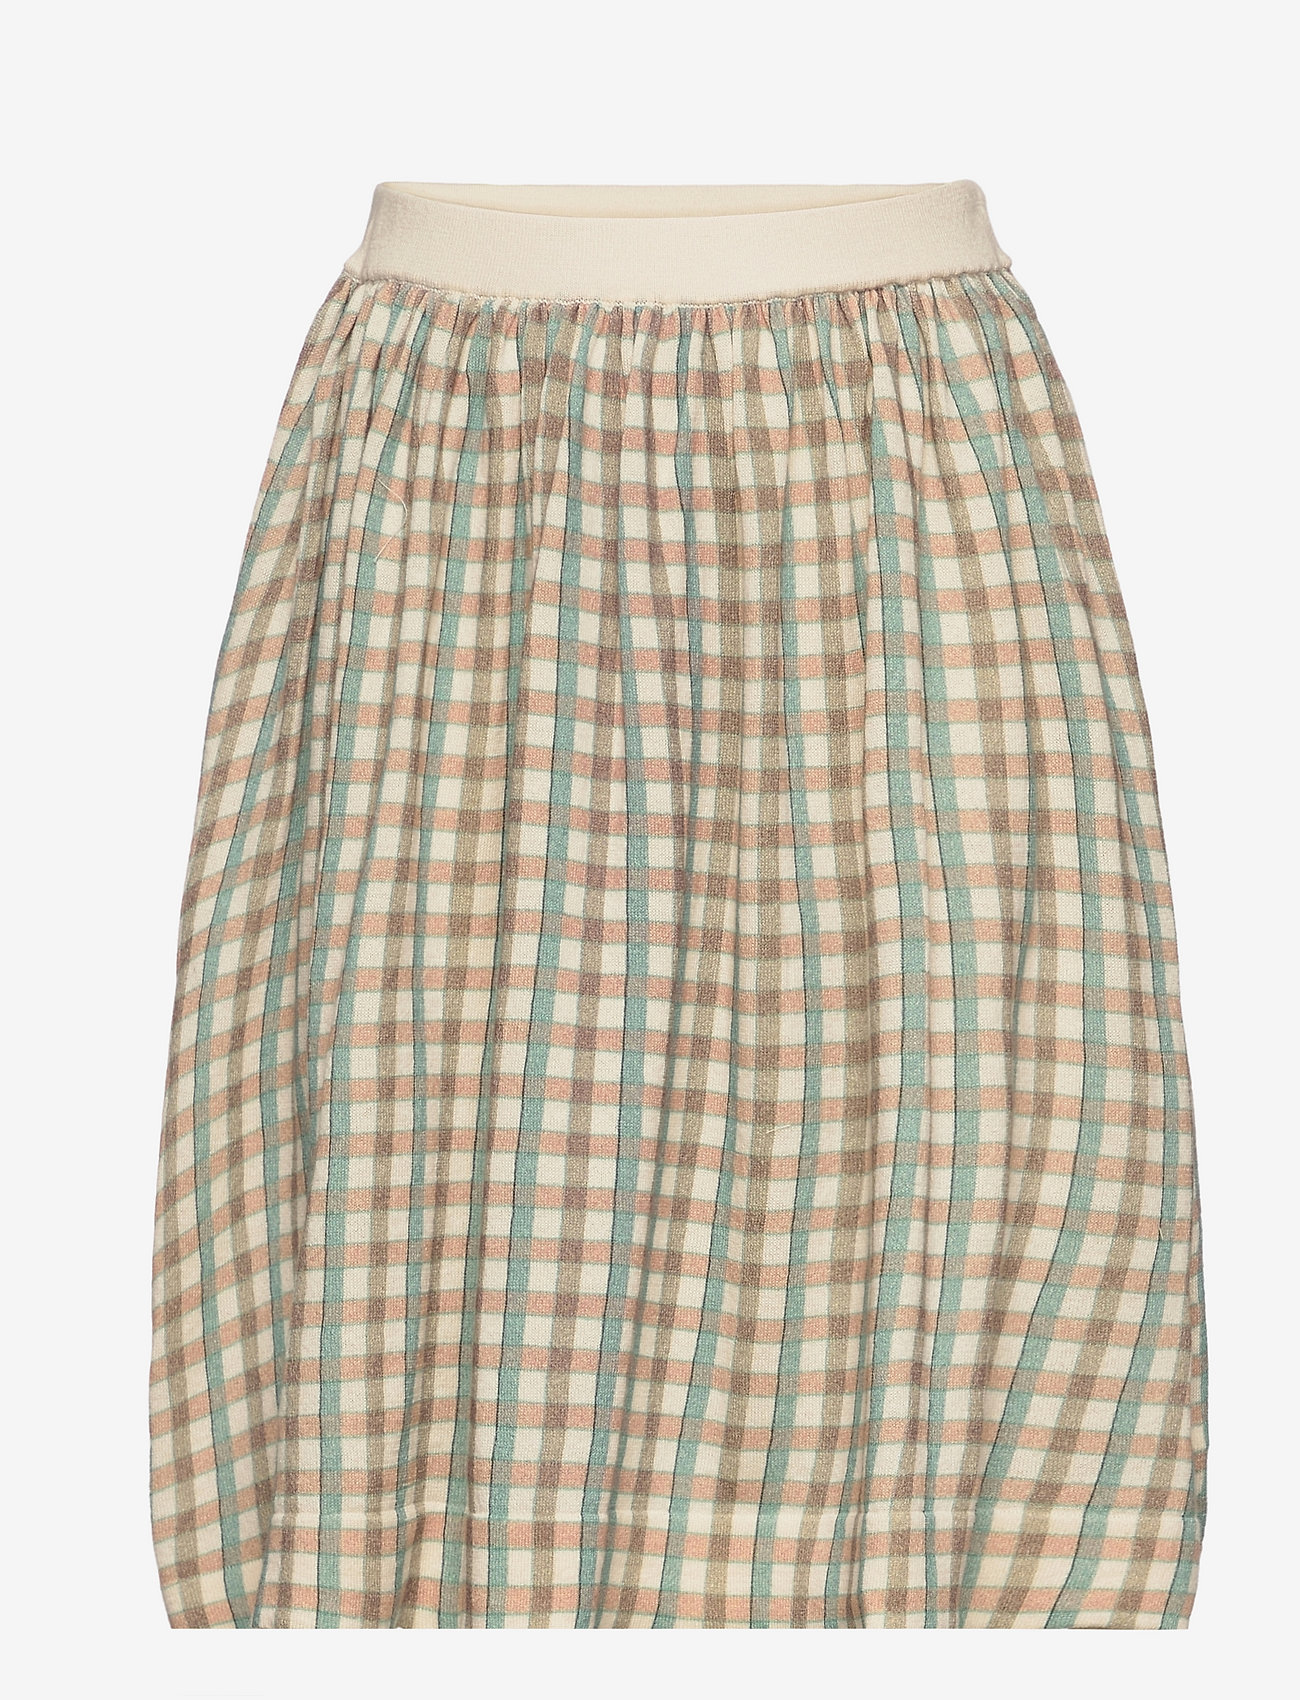 FUB - Skirt - korta kjolar - apricot - 0